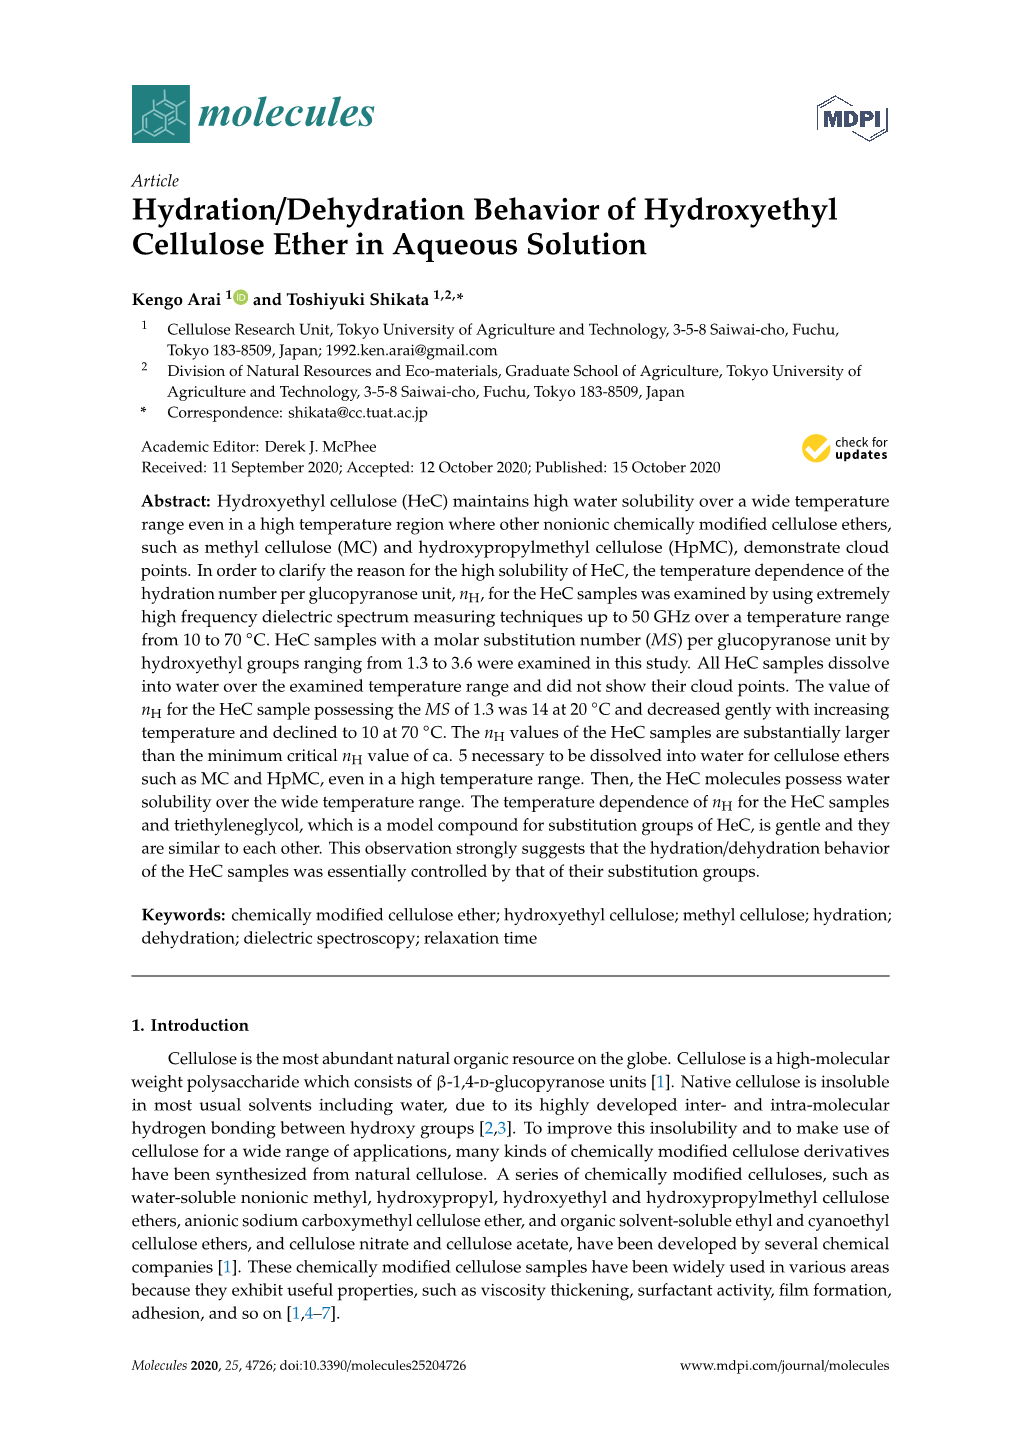 Hydration/Dehydration Behavior of Hydroxyethyl Cellulose Ether in Aqueous Solution